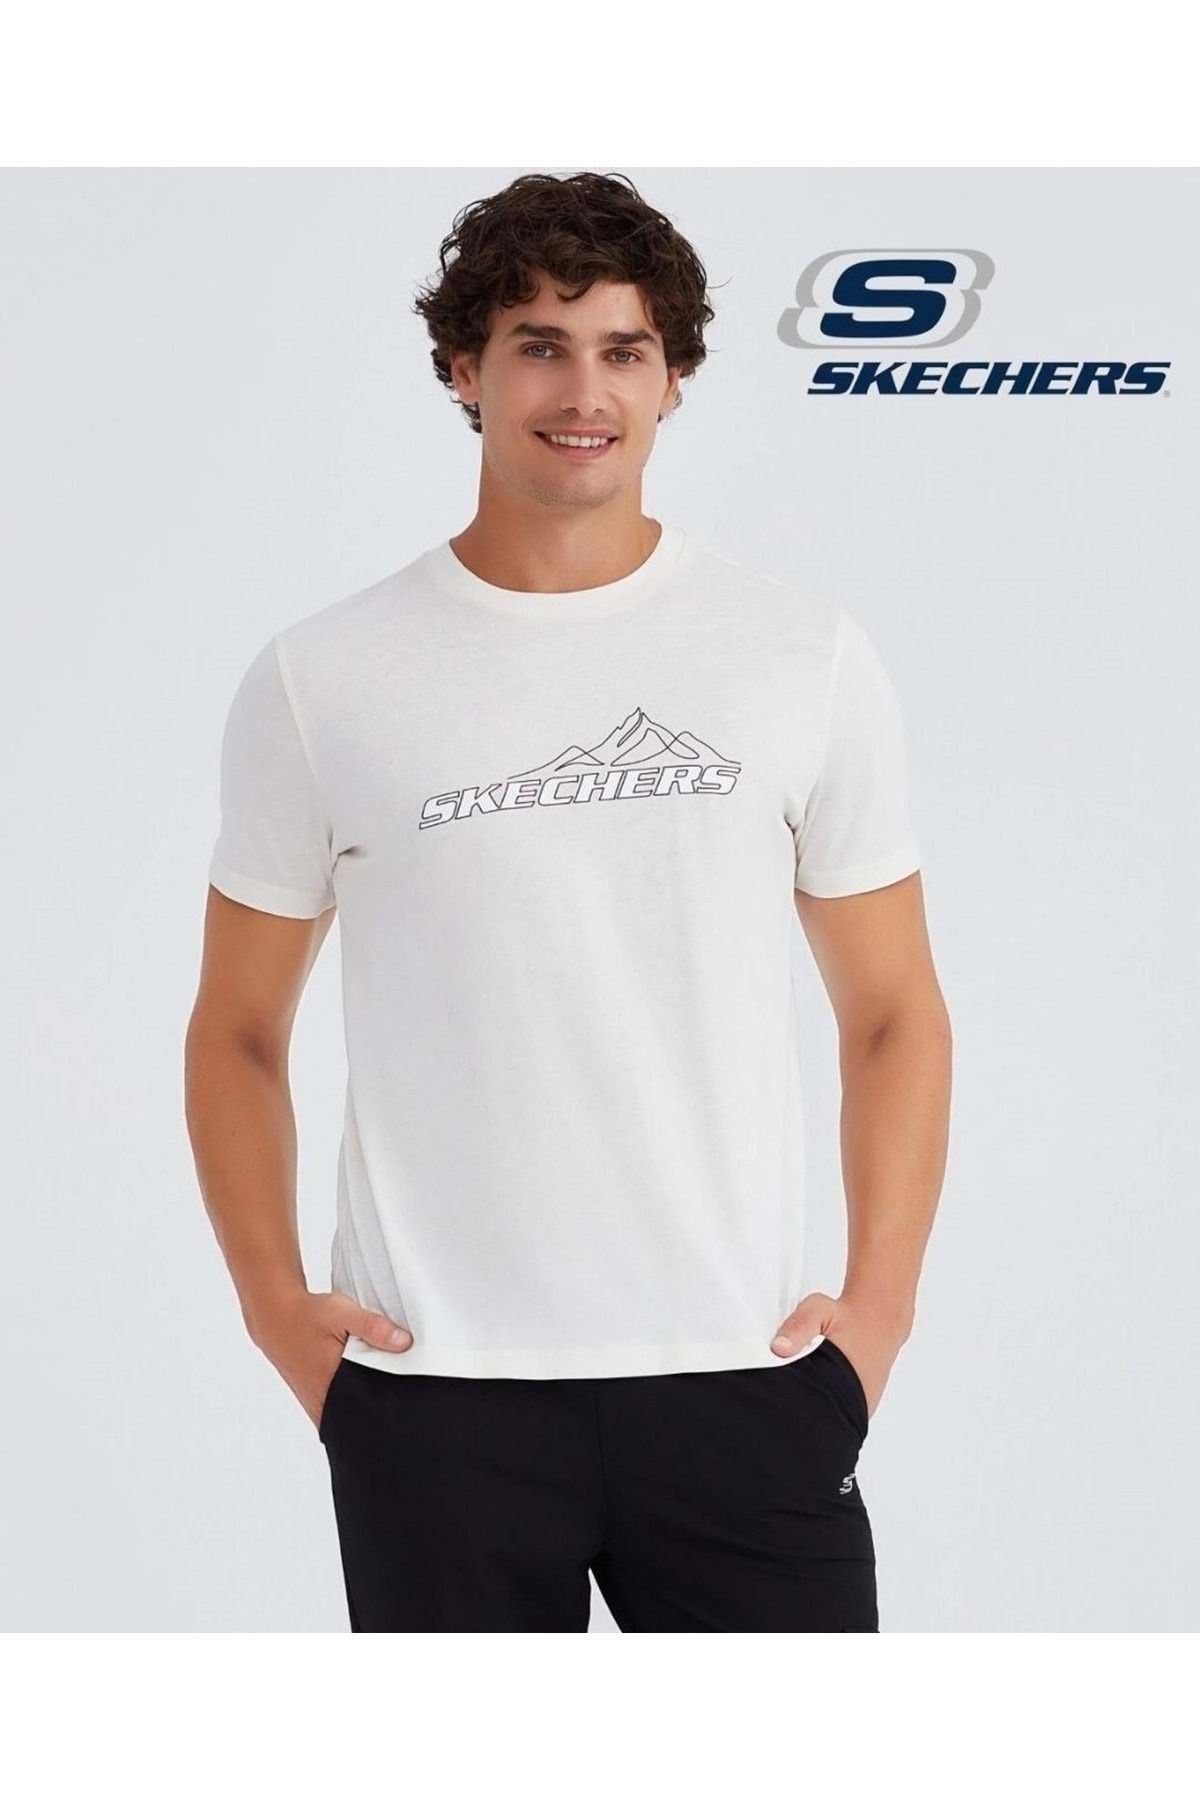 Skechers M Graphic Tee Crew Neck T-shirt S232436-001 Erkek Tişört Beyaz